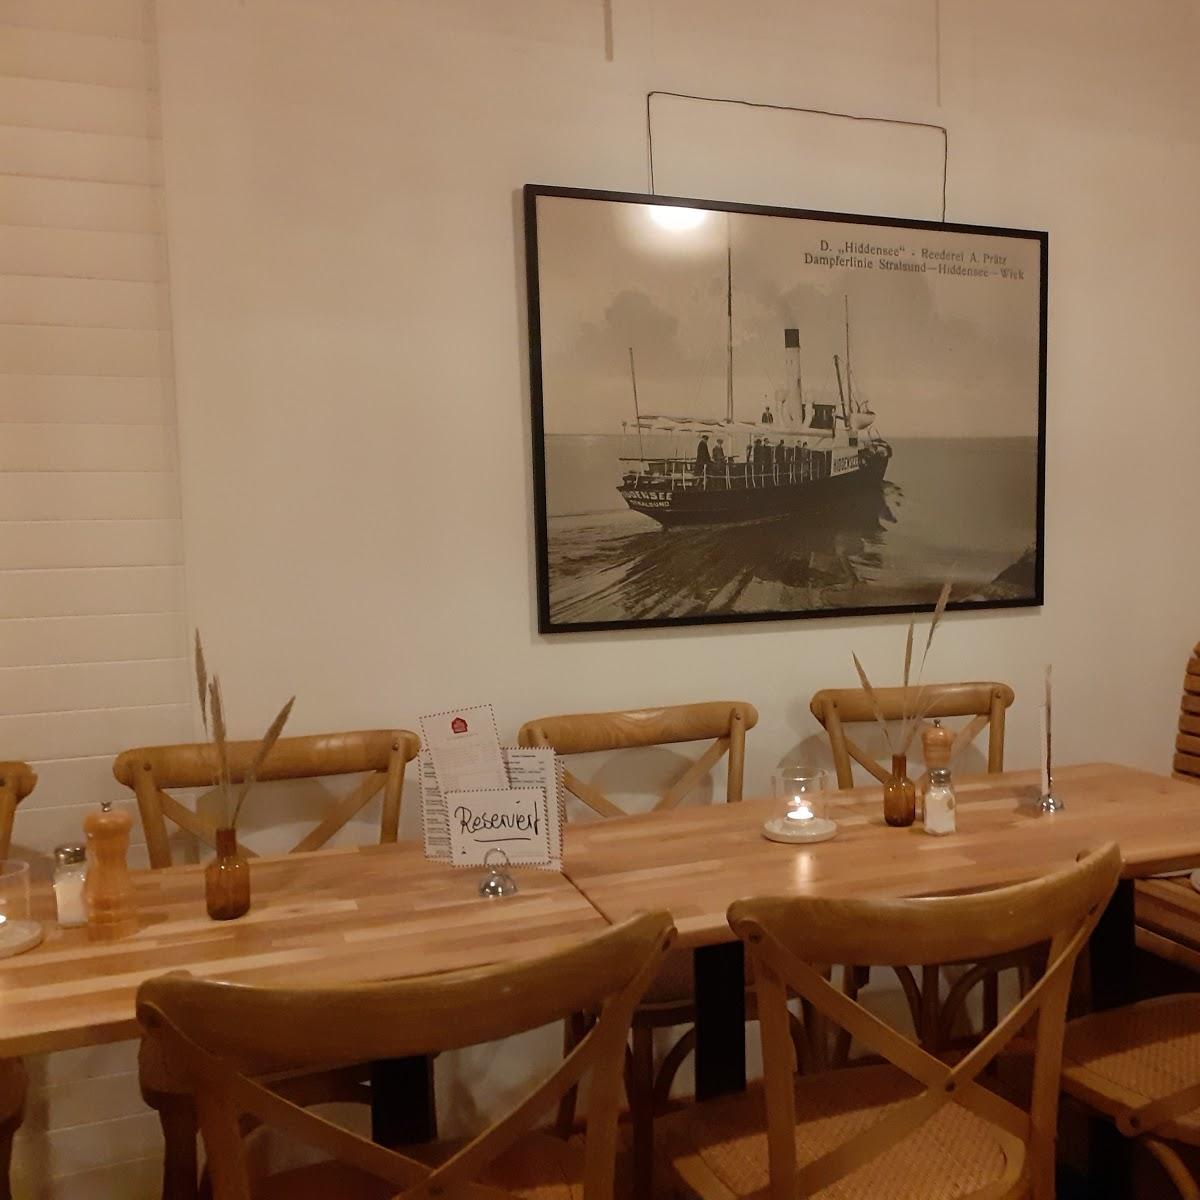 Restaurant "Das rote Haus" in Insel Hiddensee